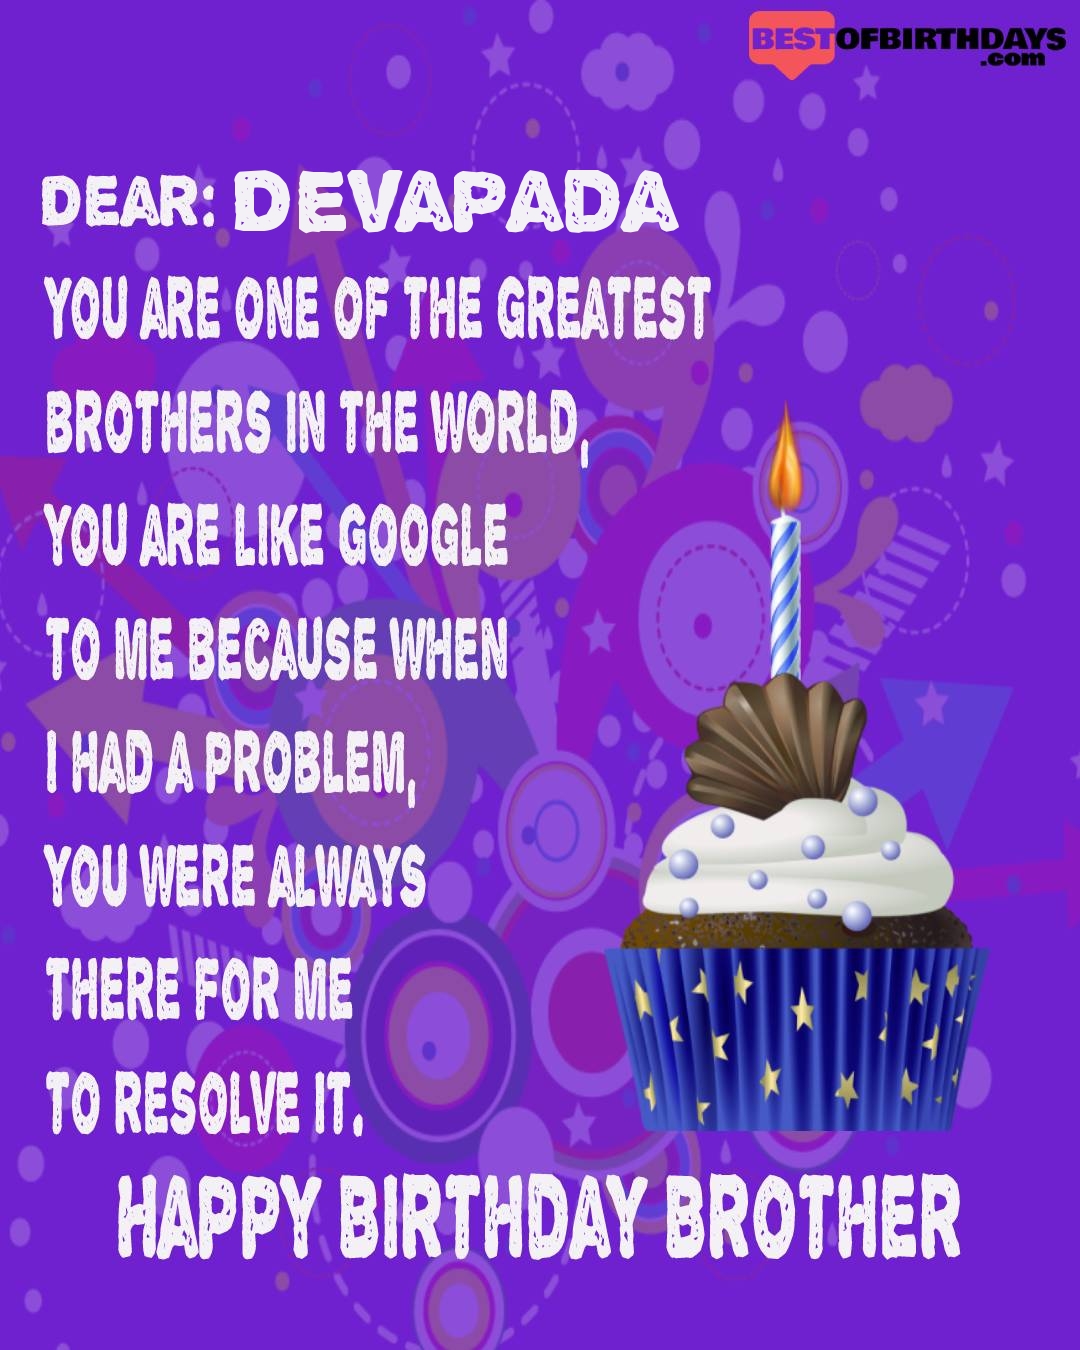 Happy birthday devapada bhai brother bro